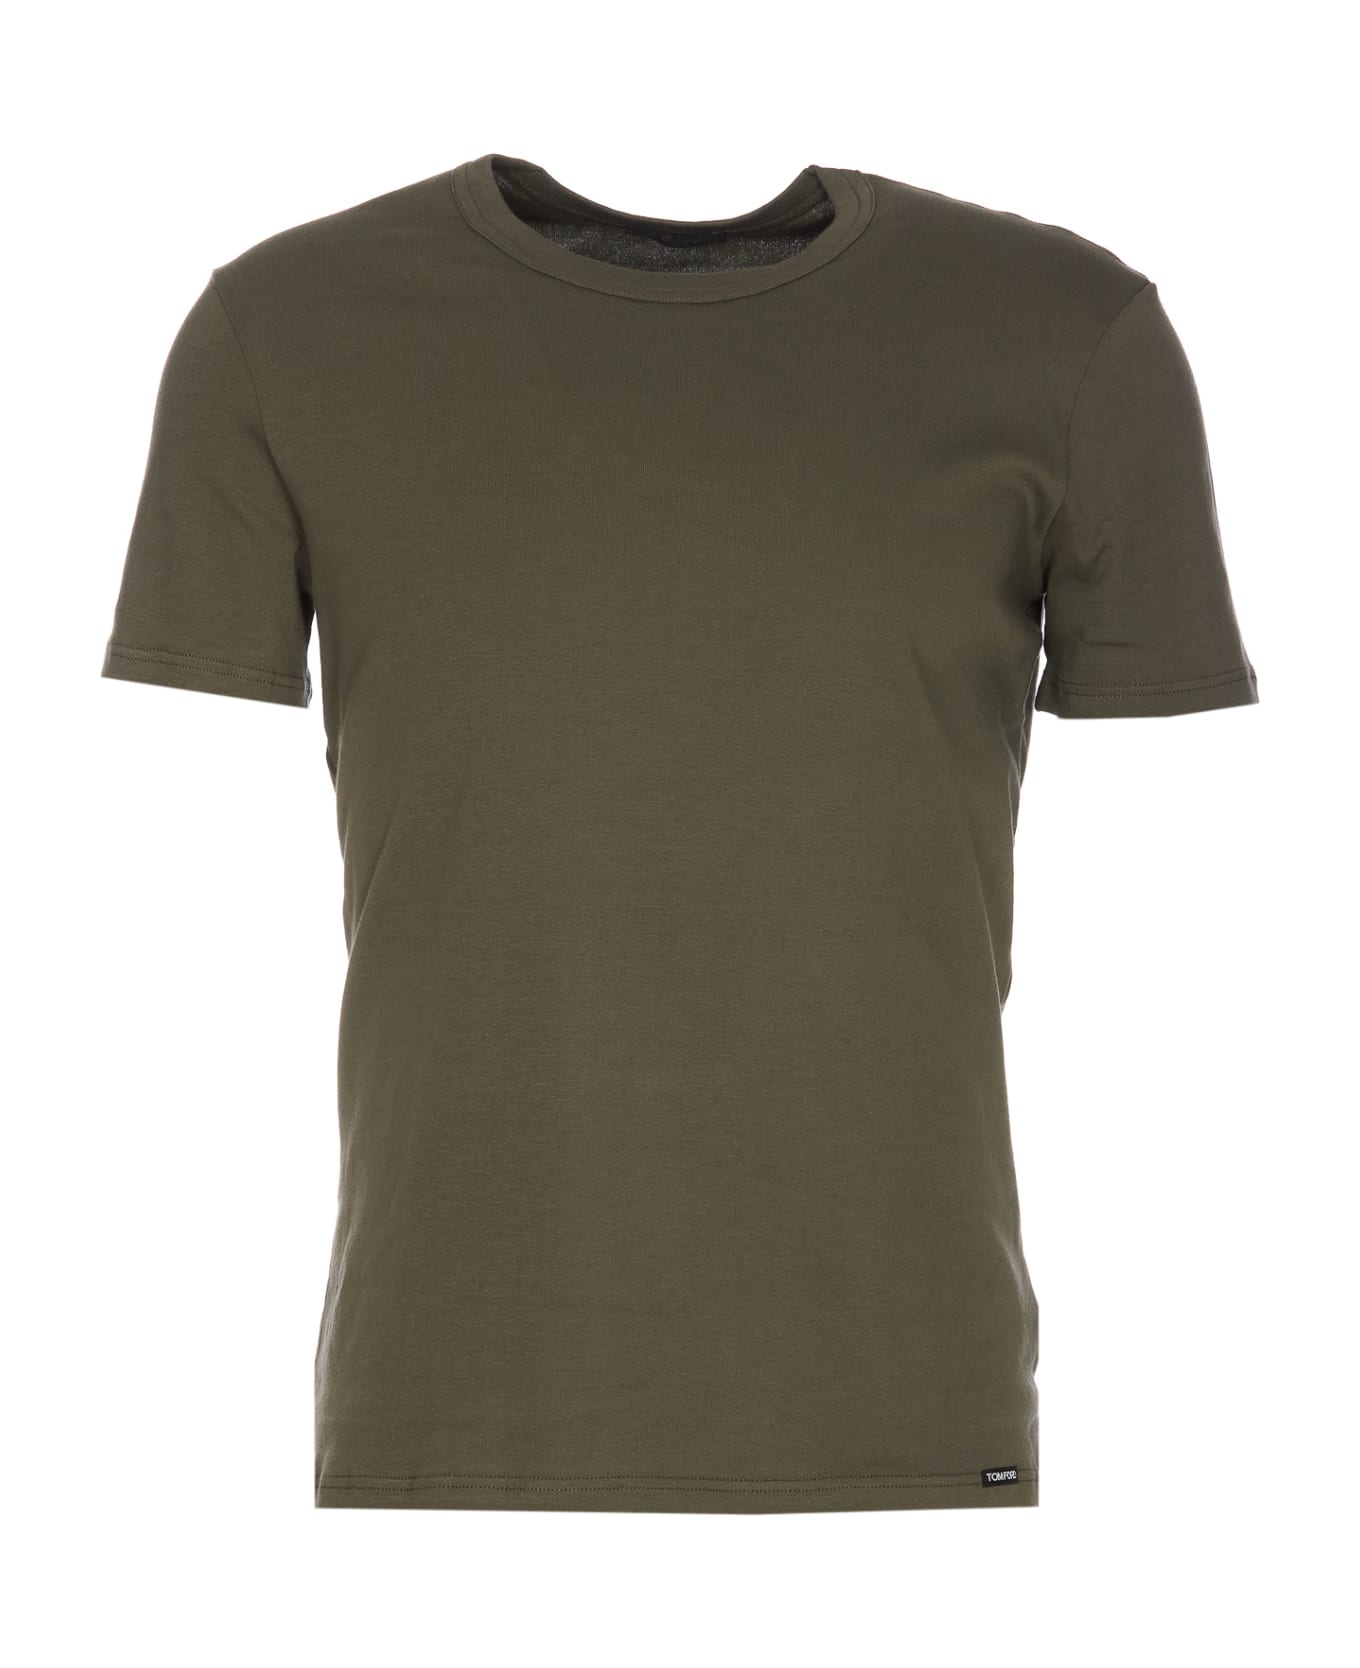 Tom Ford T-shirt - Military Green